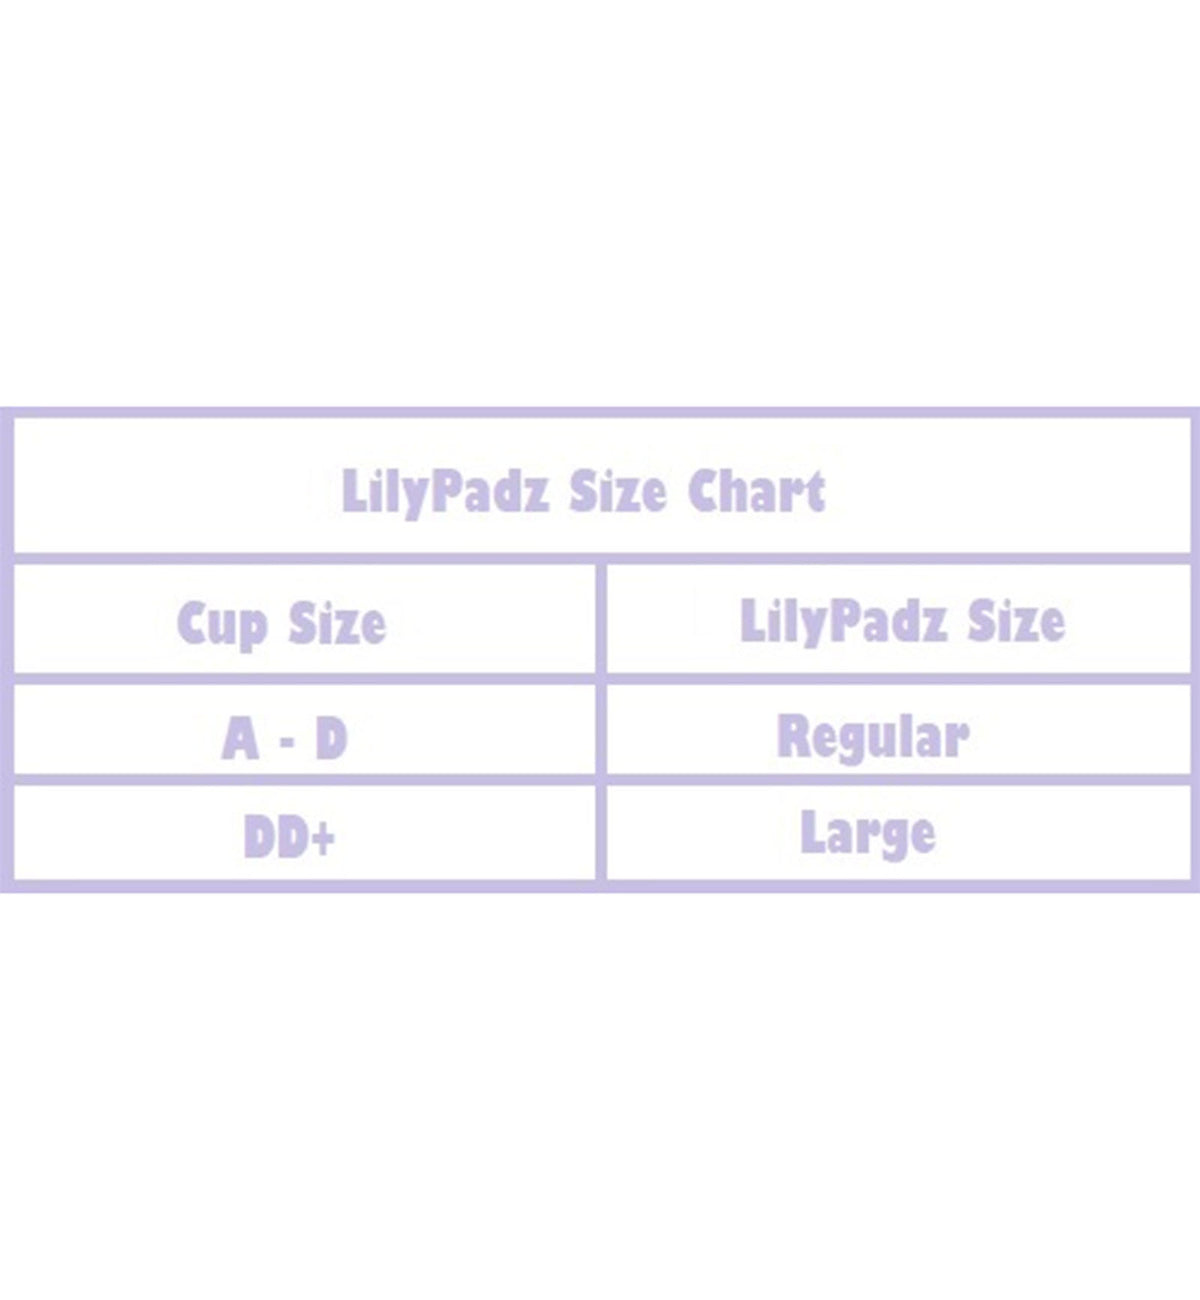 LilyPadz Reusable Silicone Nursing Pads (LP-AL),One Pair-Large,Clear - Clear,Large